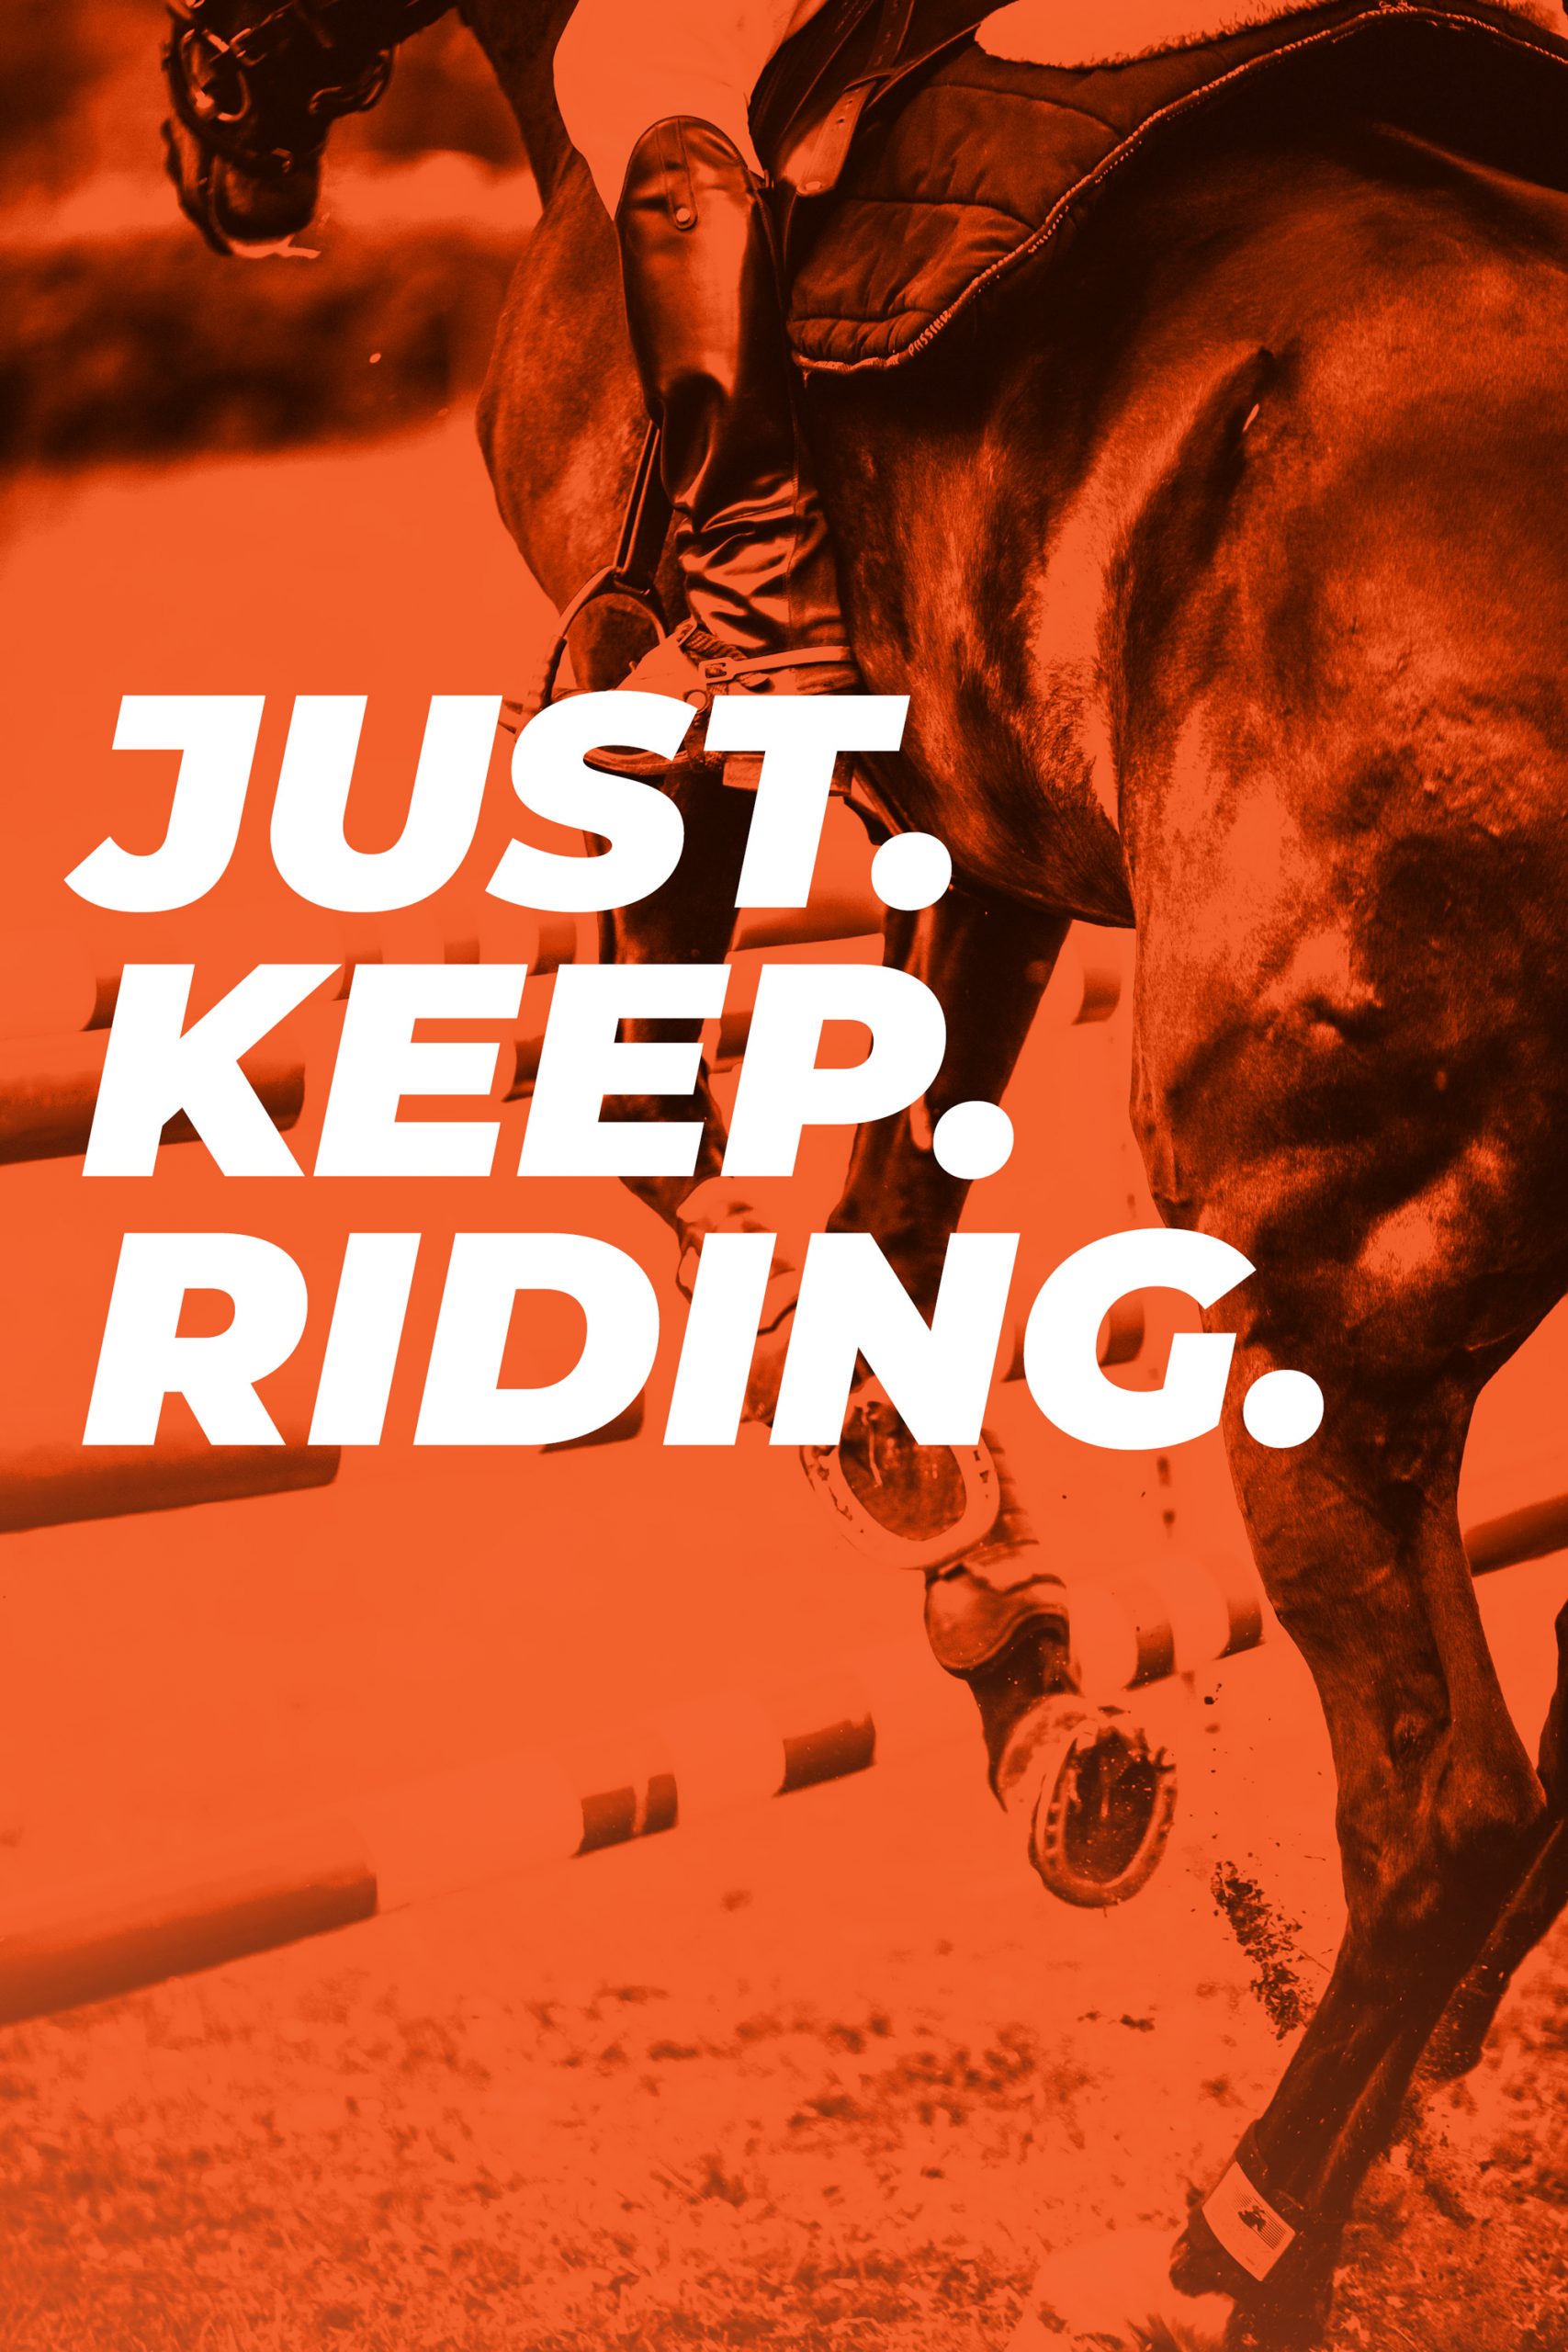 Just. Keep. Riding.